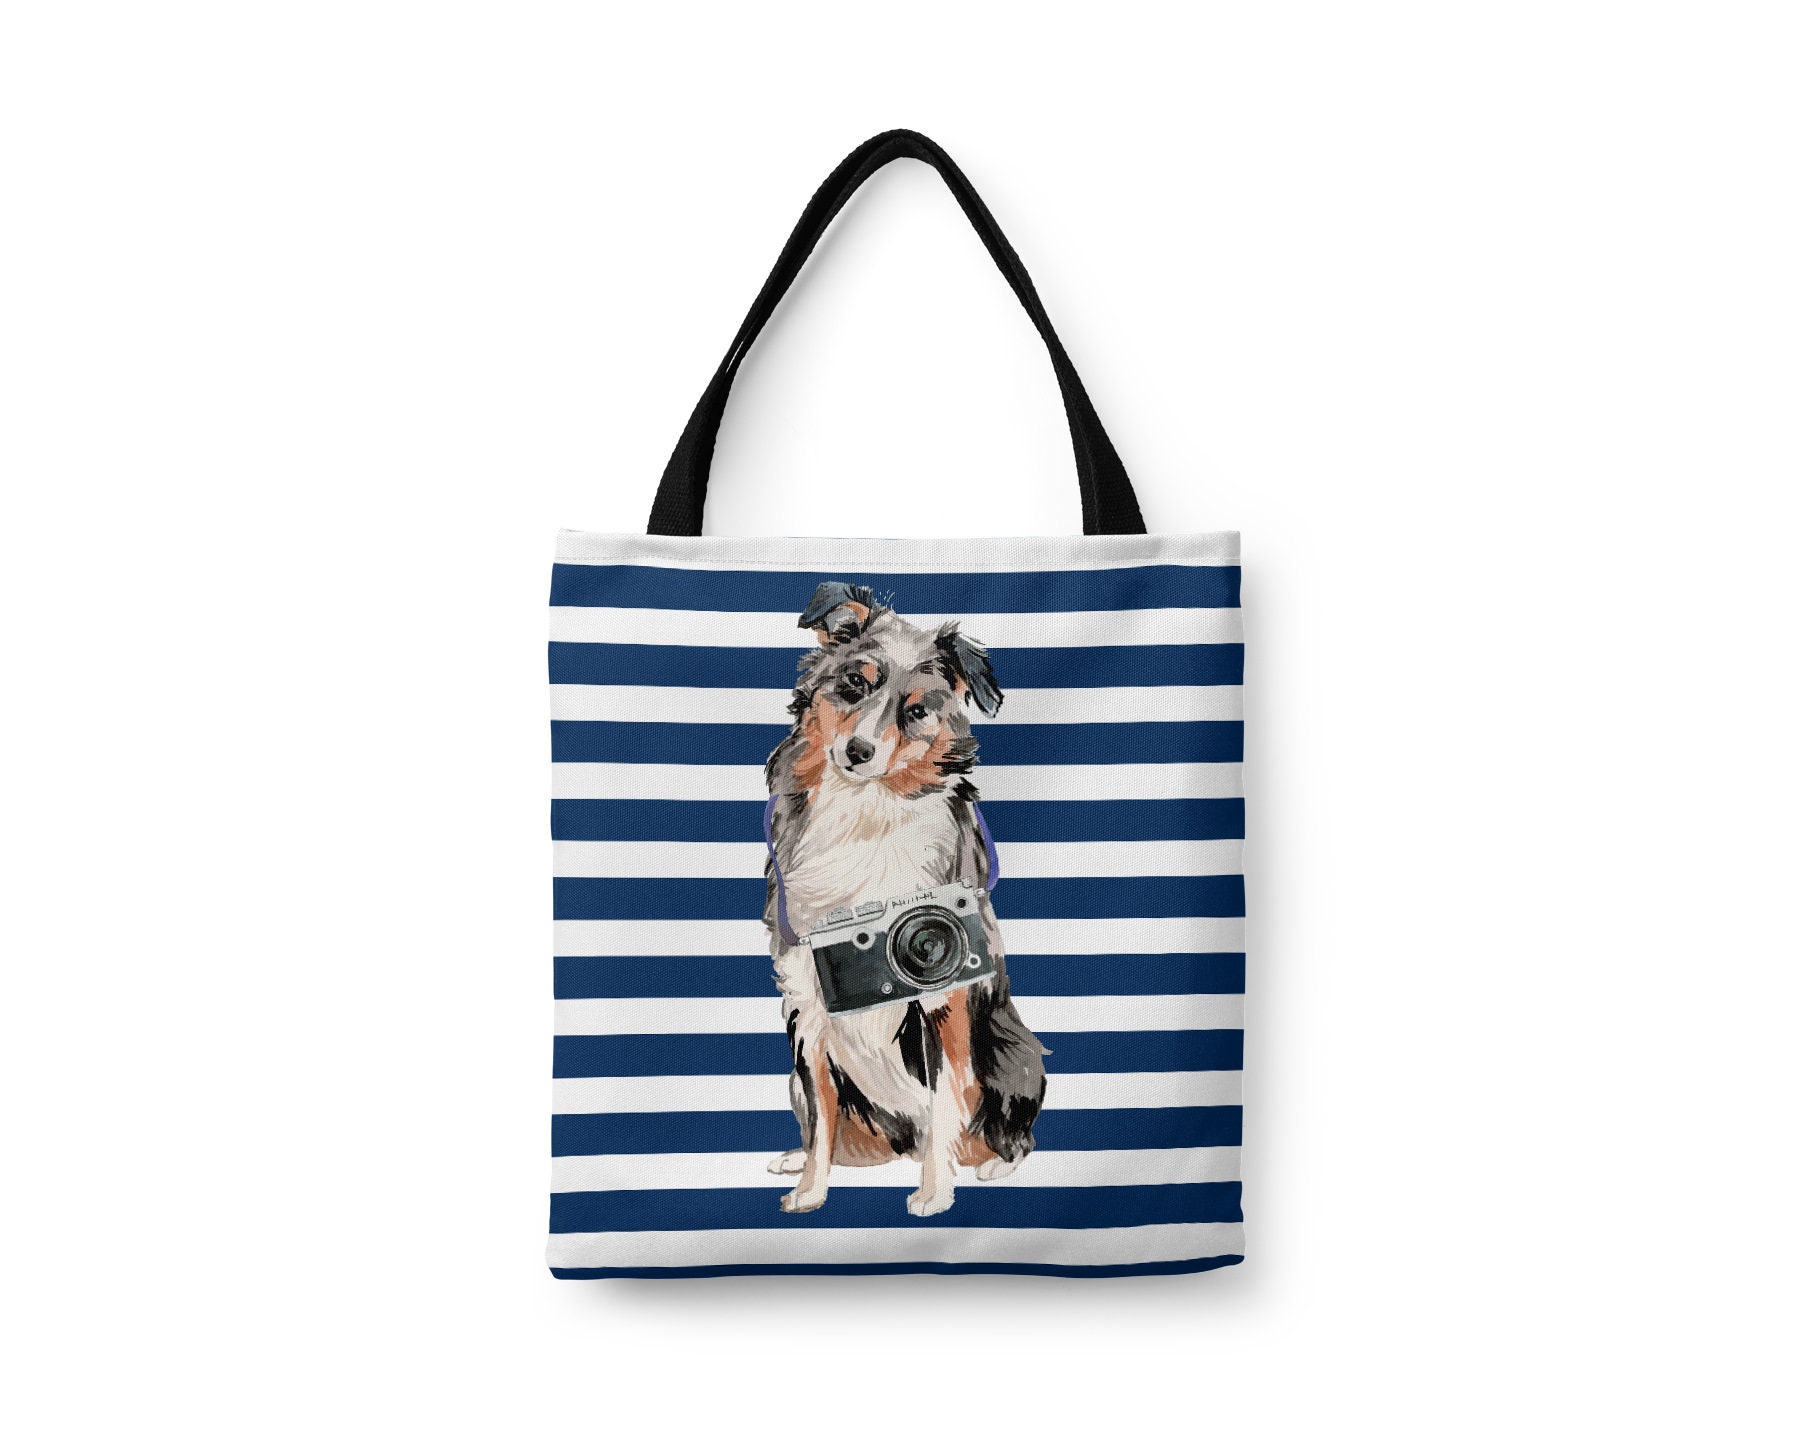 Australian Shepherd Large Tote Bag - Illustrated Dogs & 6 Travel Inspired Styles. All Purpose For Books, Work, Shopping. Aussie Little Blue